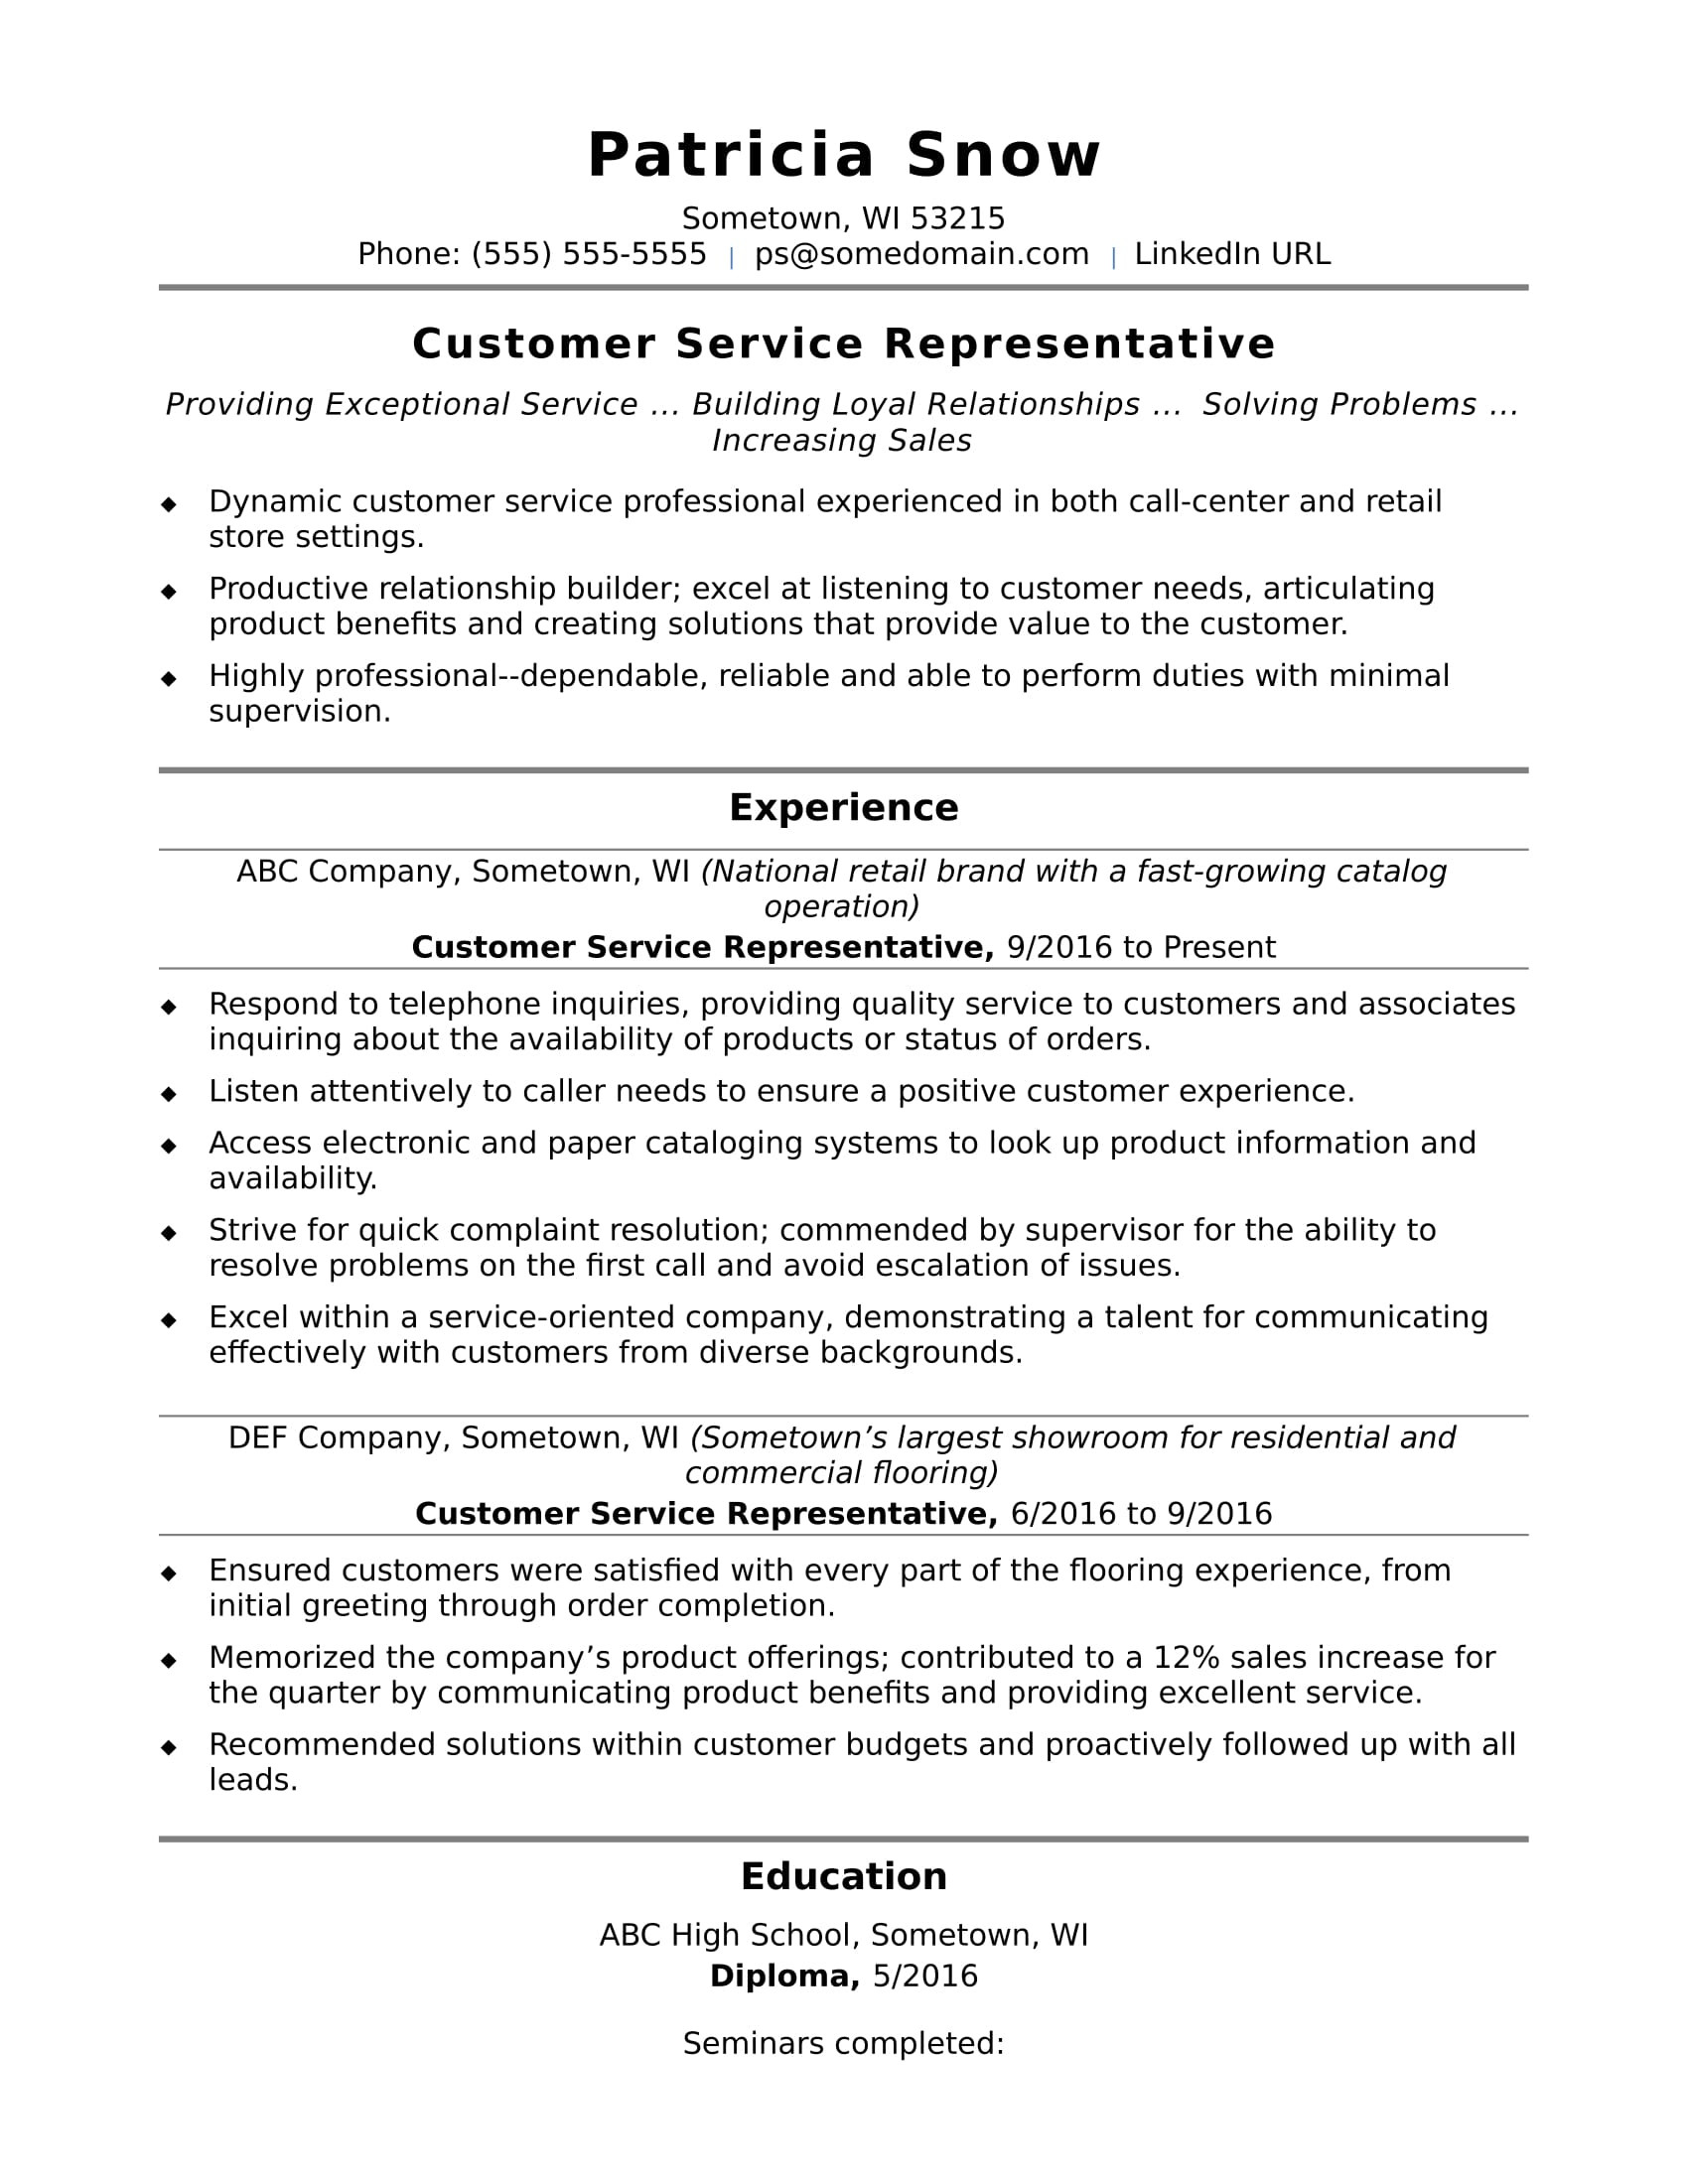 Sample Resume Objectives for Sales Representative Customer Service Representative Resume Sample Monster.com